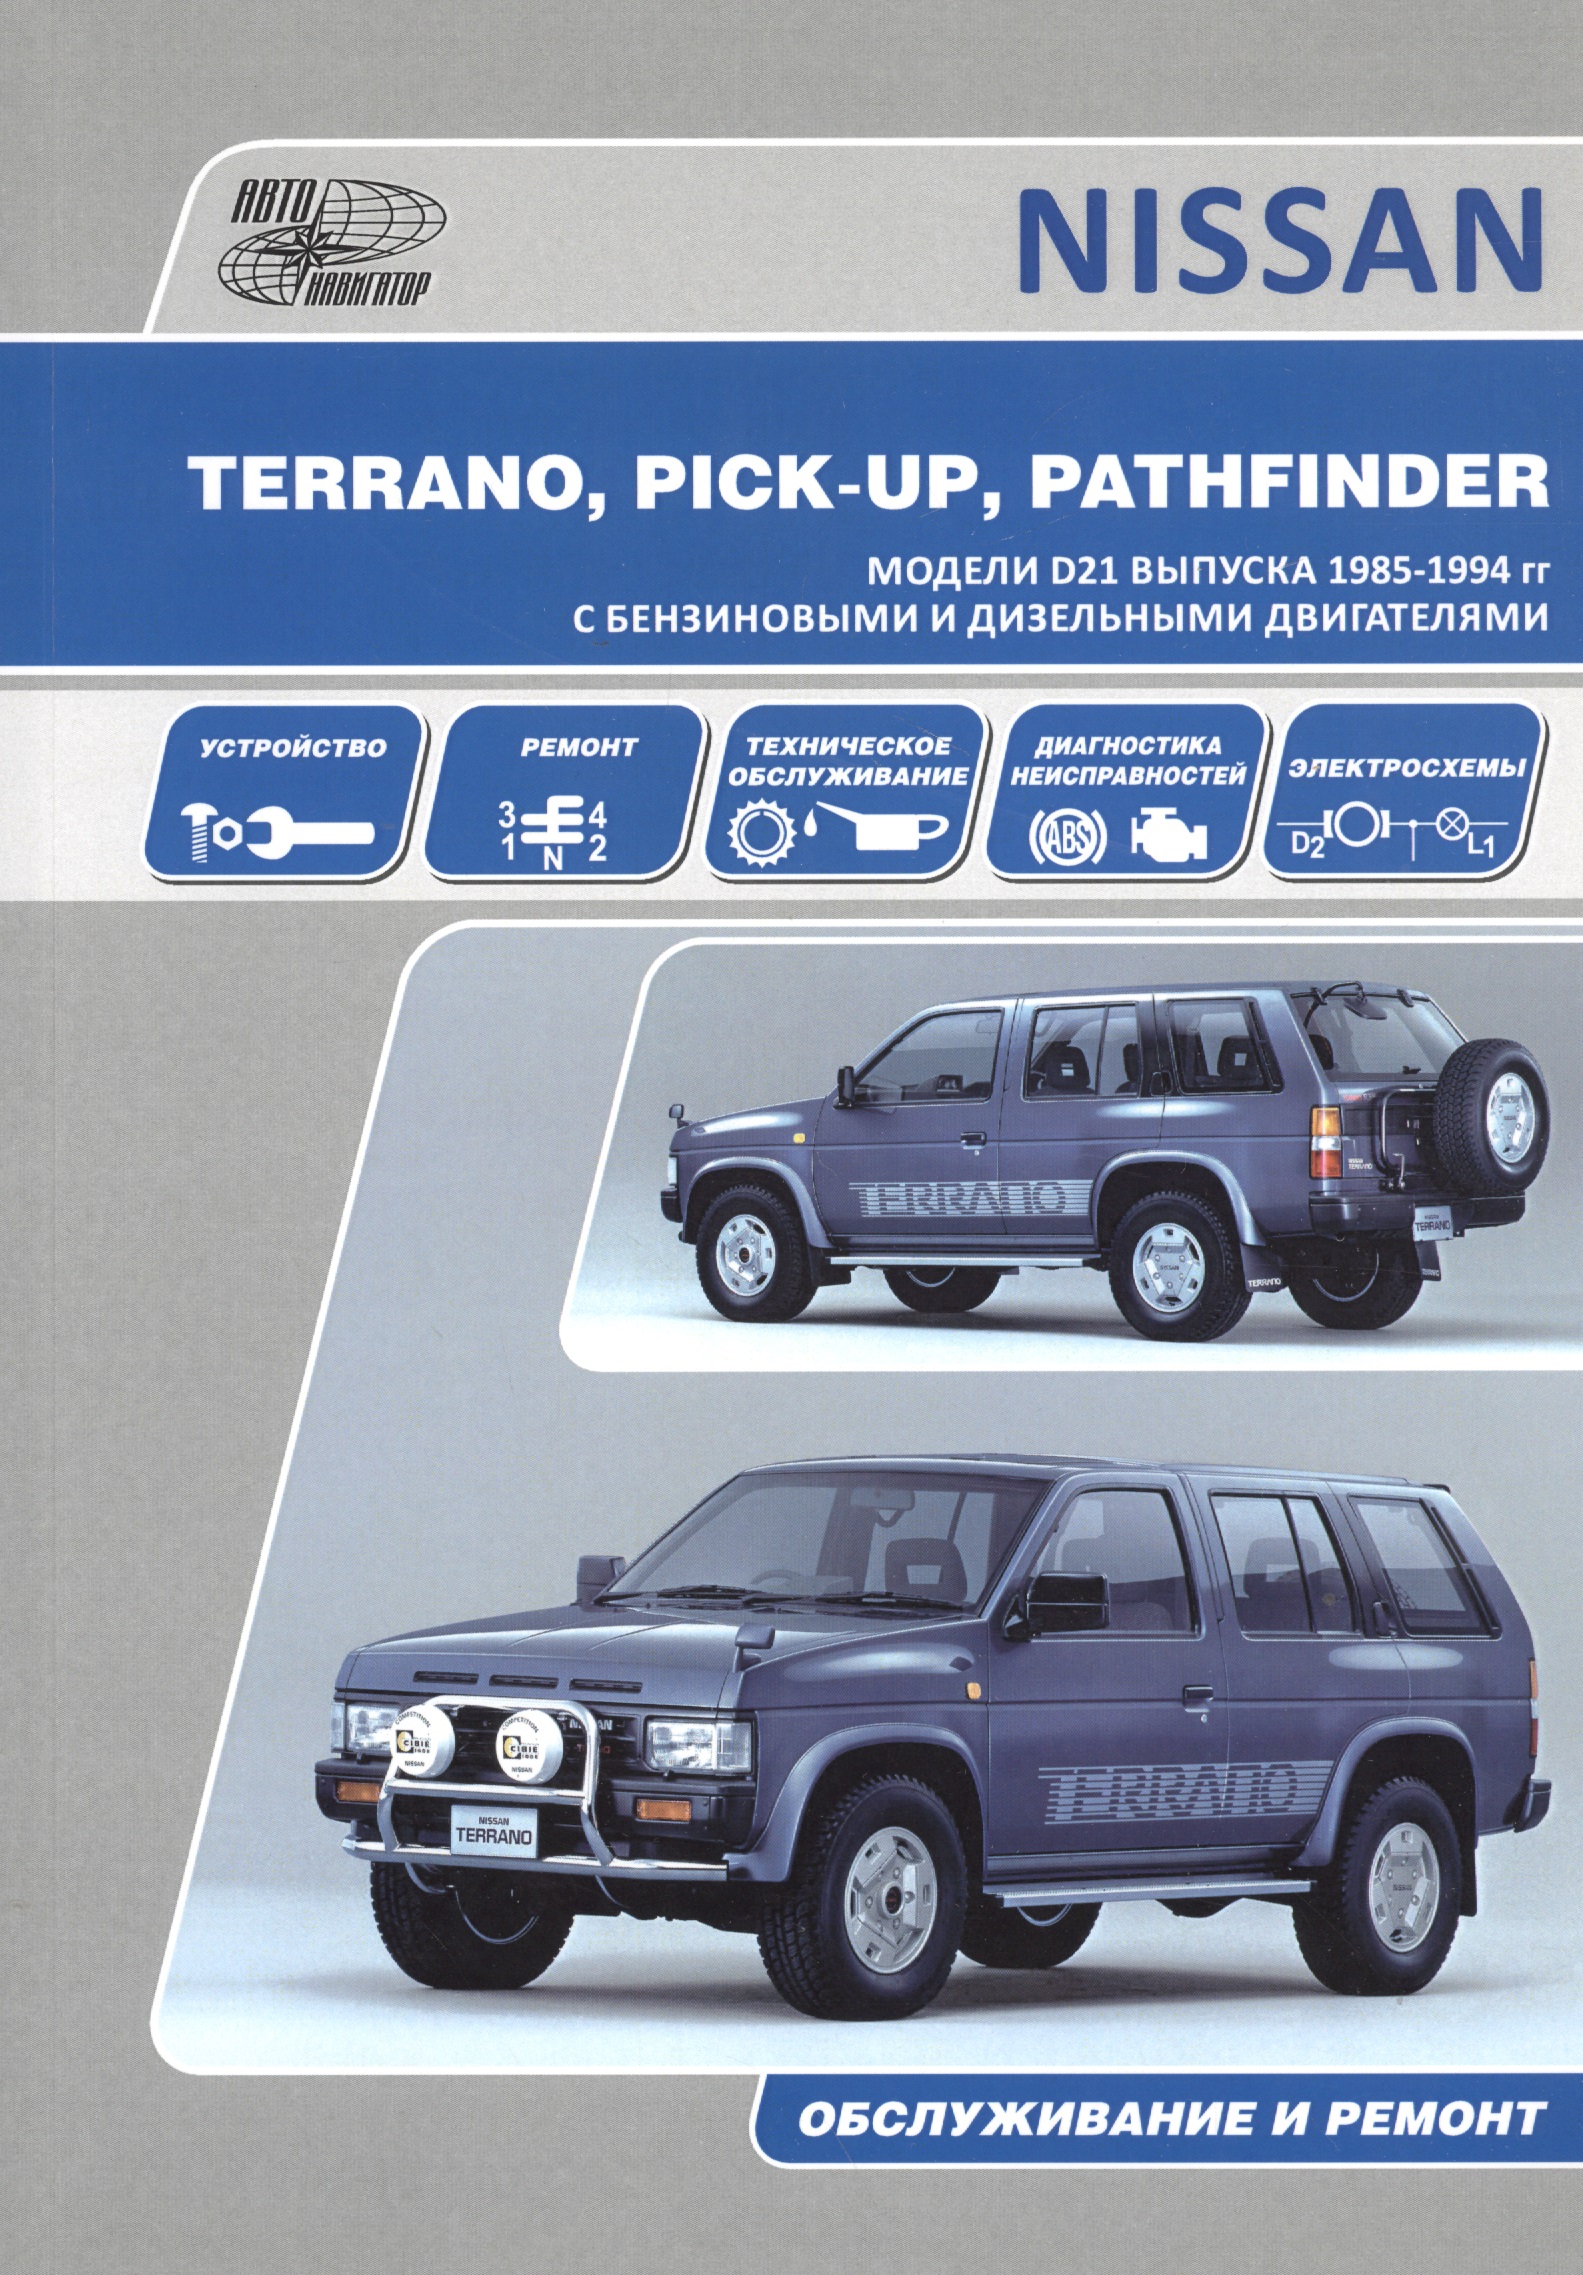 Nissan Terrano Pick Up Pathfinder Мод. D21 вып. 1985-1994 гг. с бенз. двигат. Z16S (м)